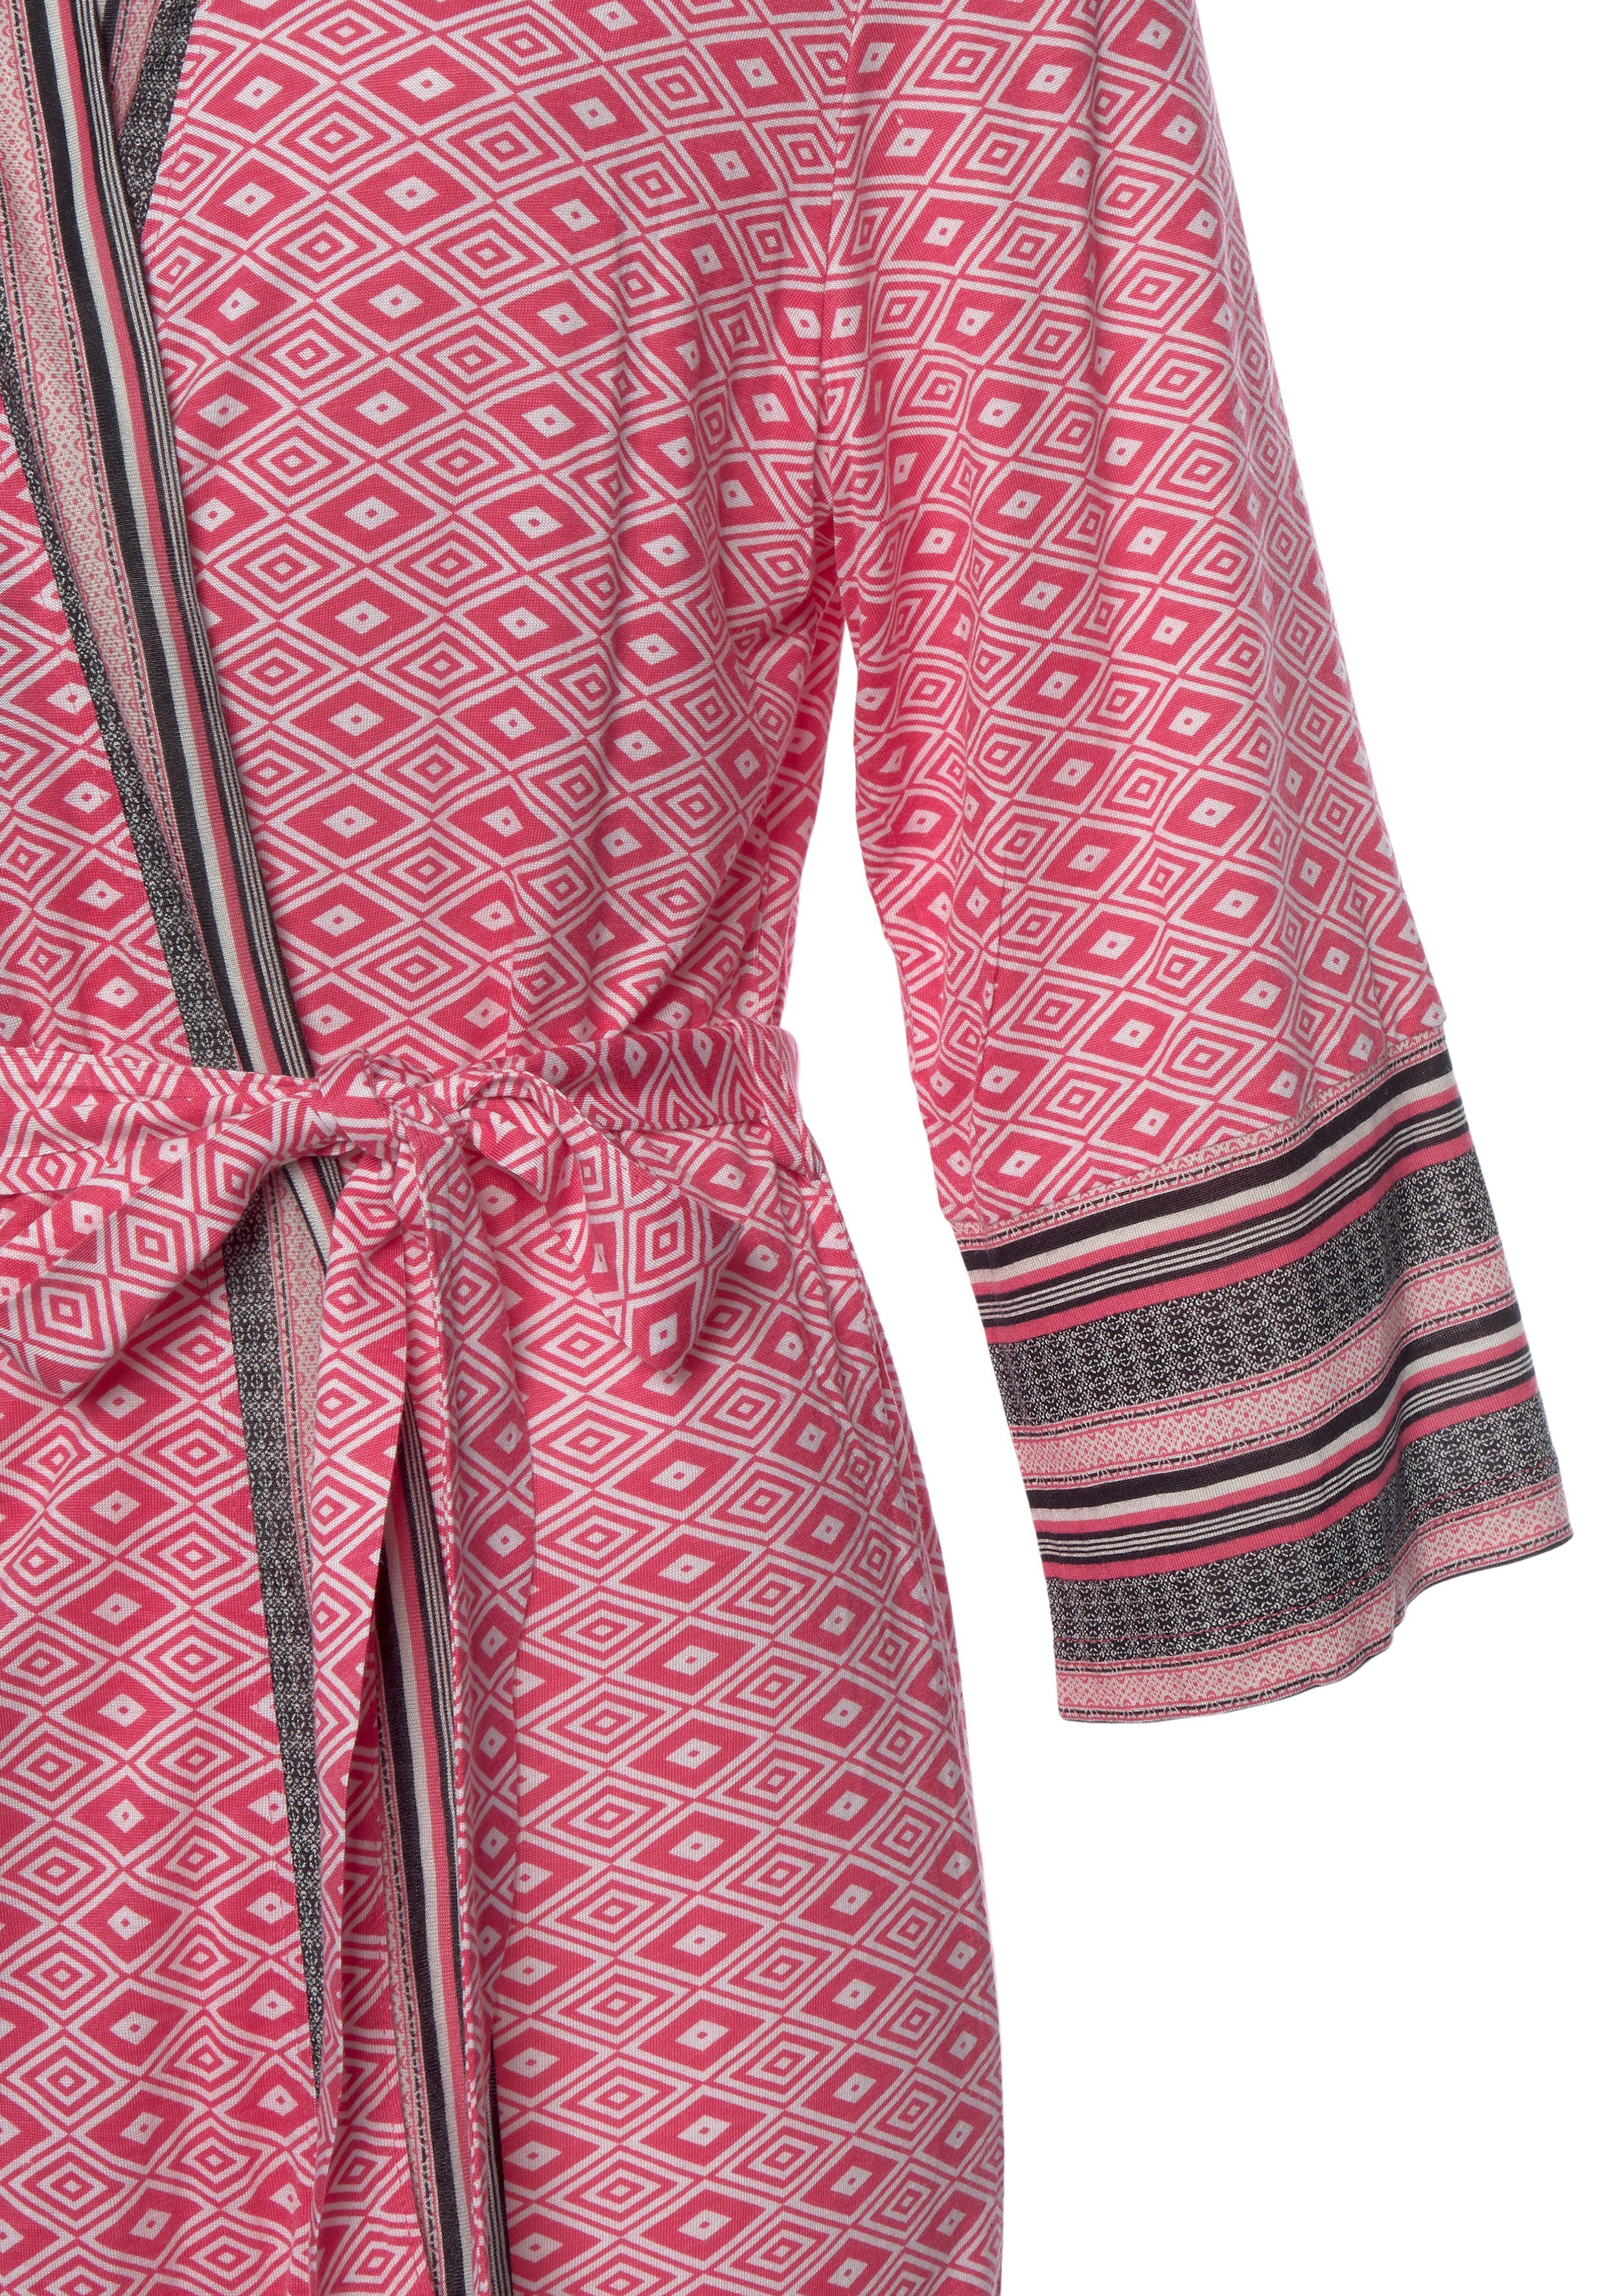 Vivance Dreams Kimono, Kurzform, pink Ethno-Design in schönem gemustert Gürtel, Kimono-Kragen, Single-Jersey